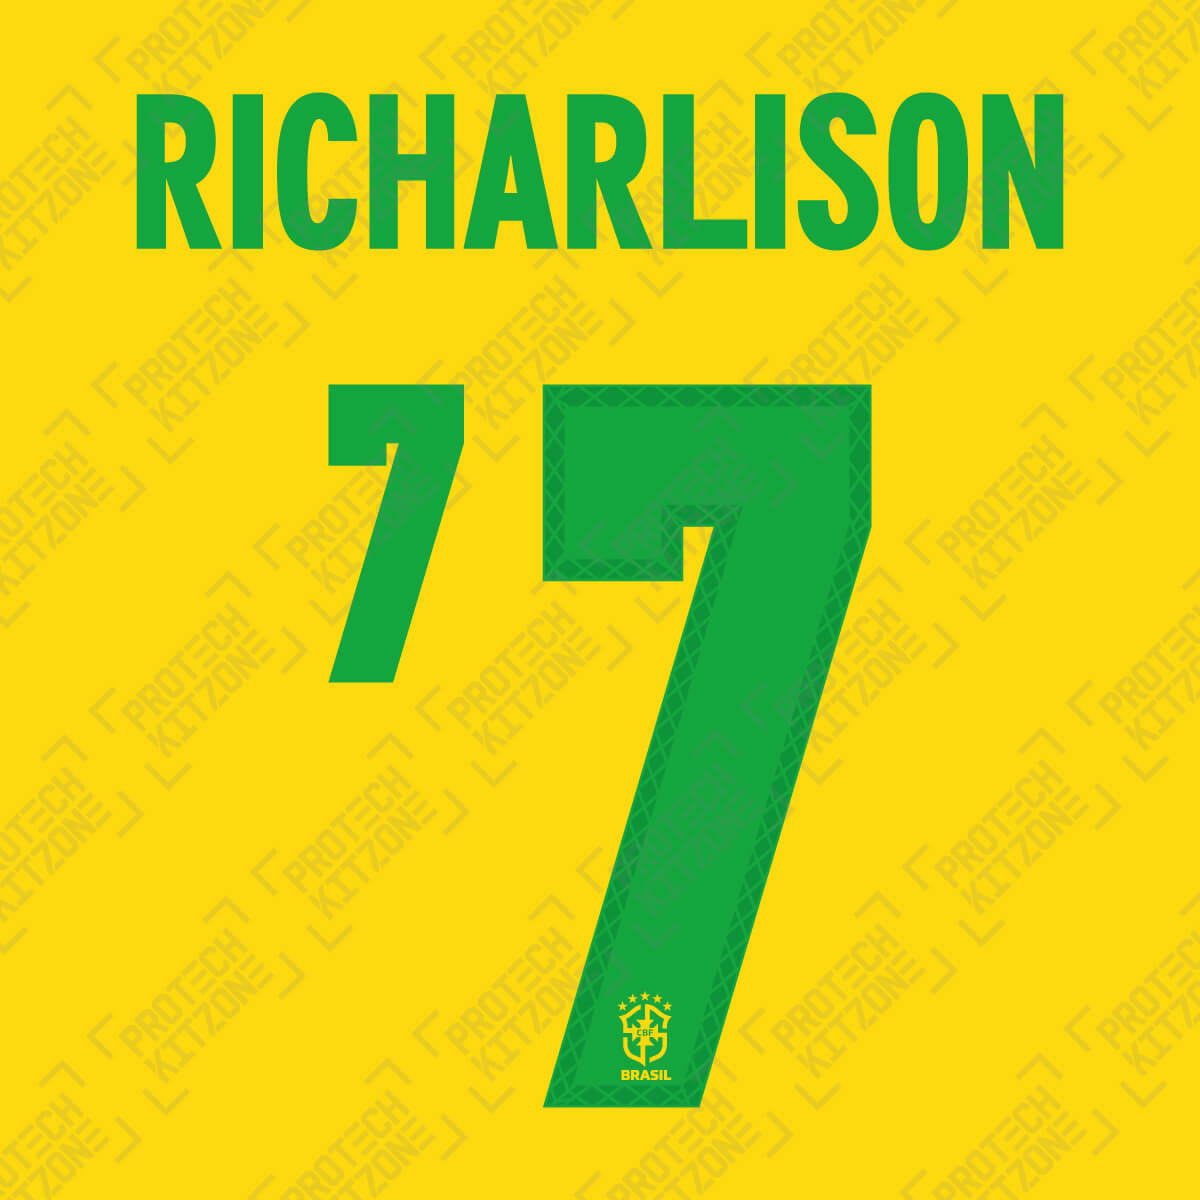 richarlison kit number